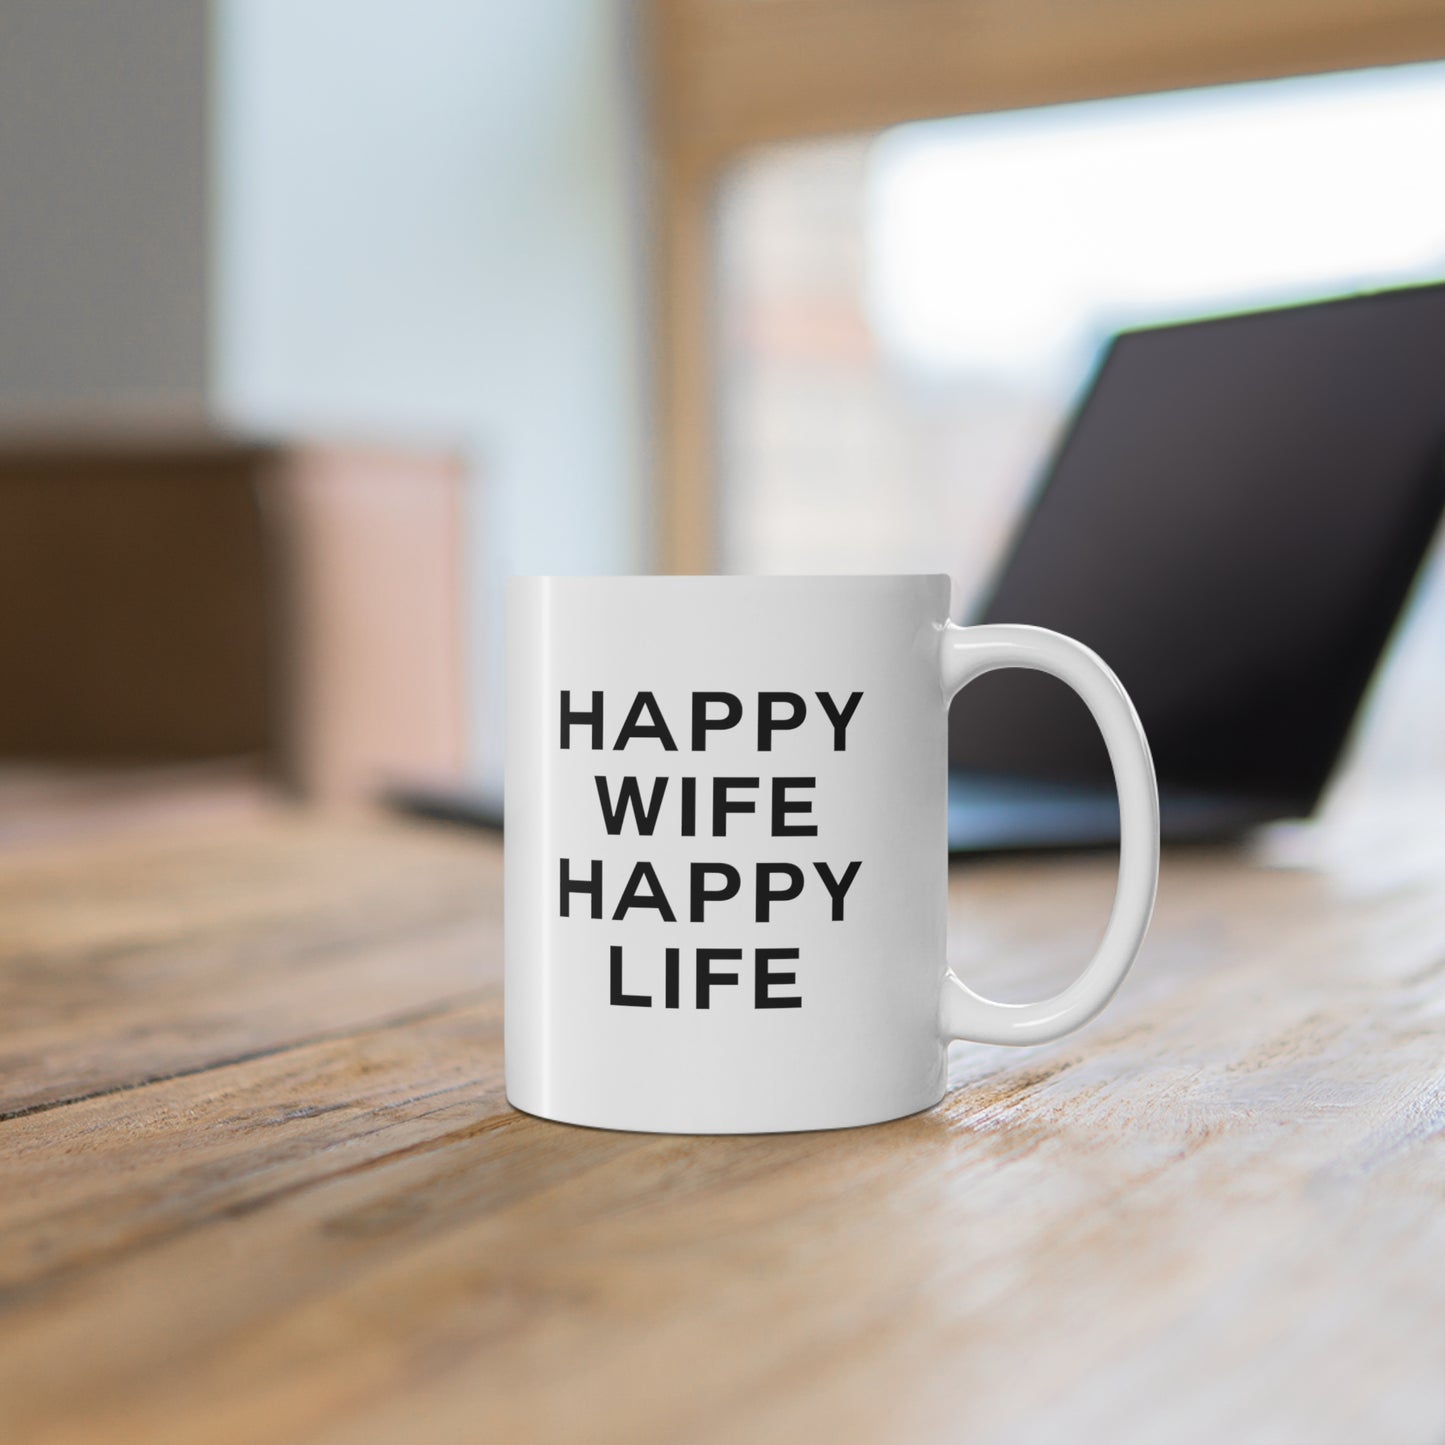 11oz ceramic mug with quote Happy Wife Happy Life